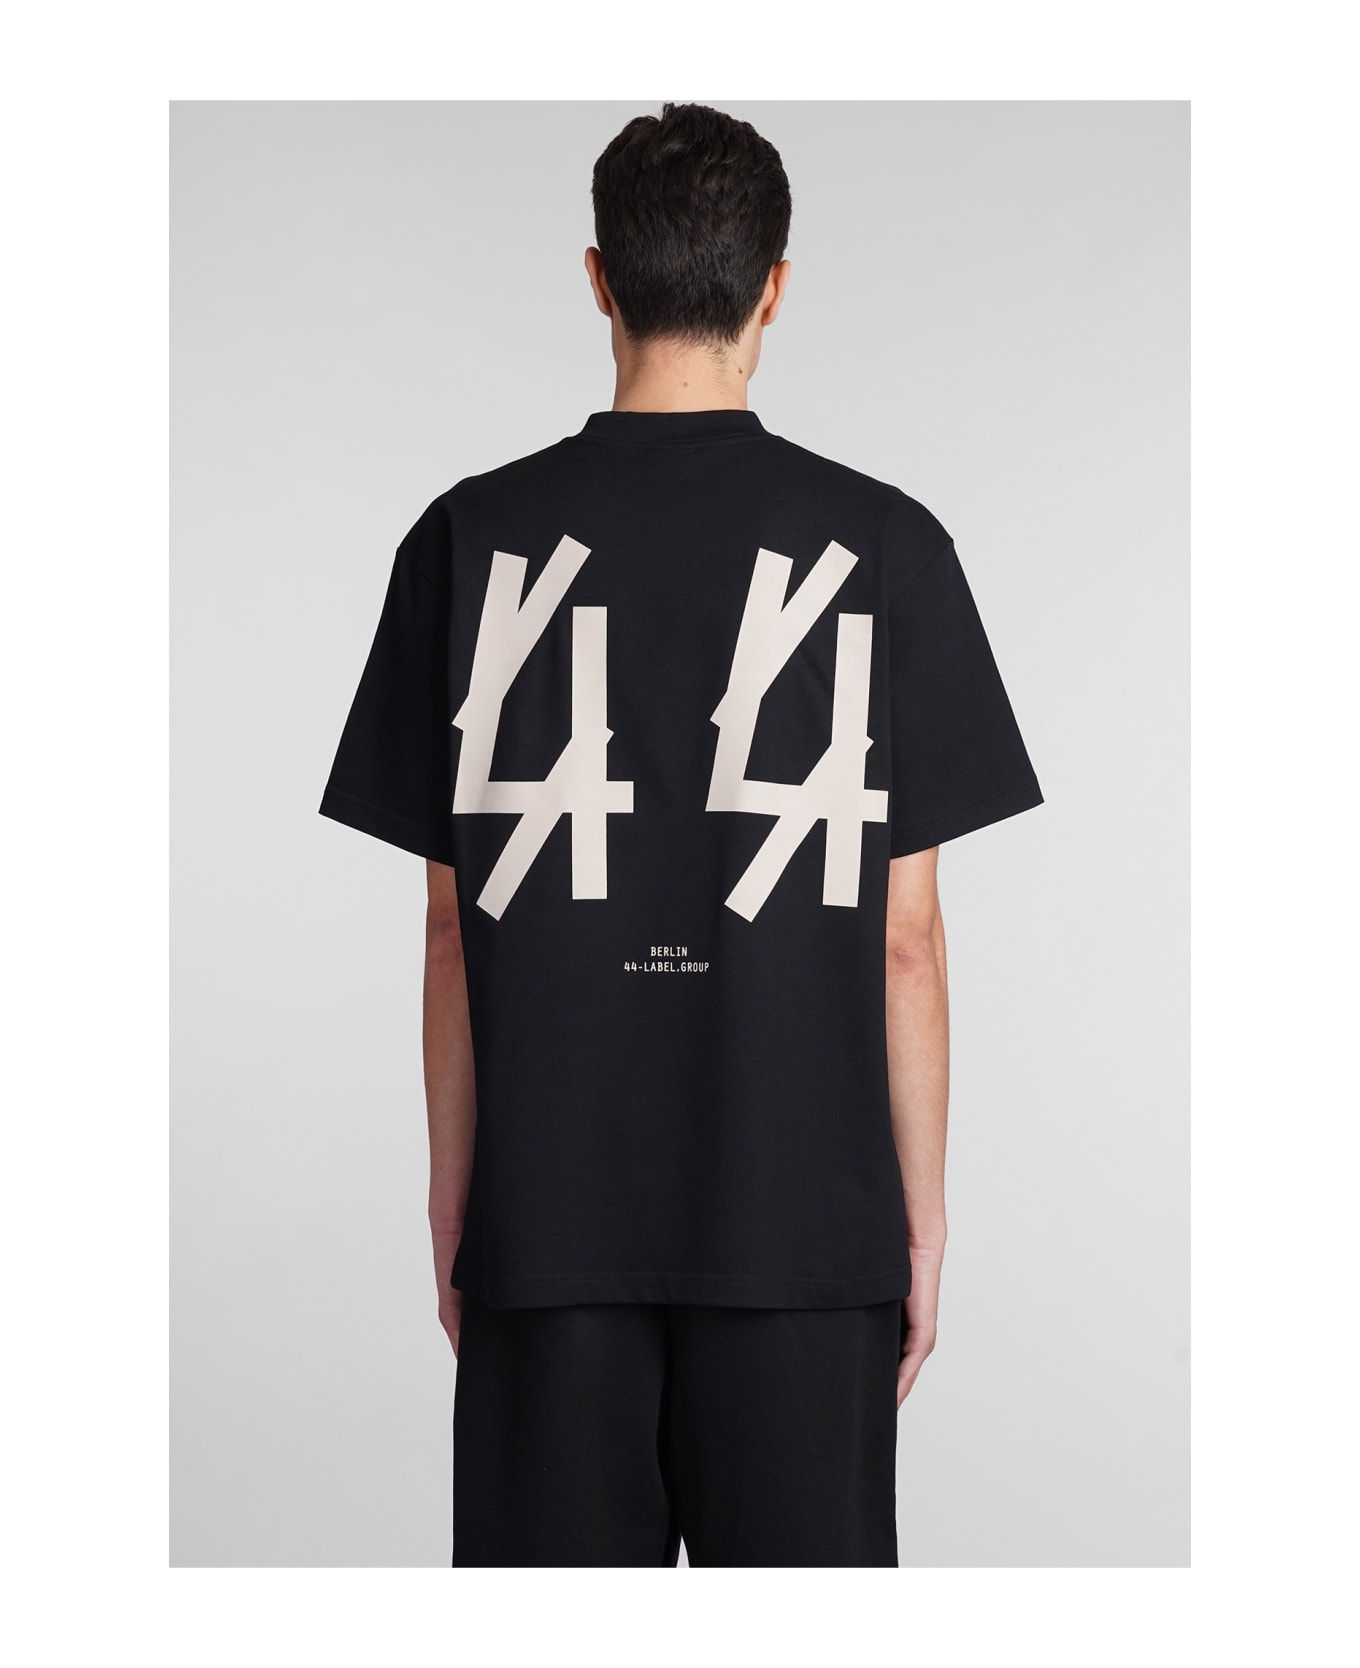 44 Label Group T-shirt In Black Cotton - black